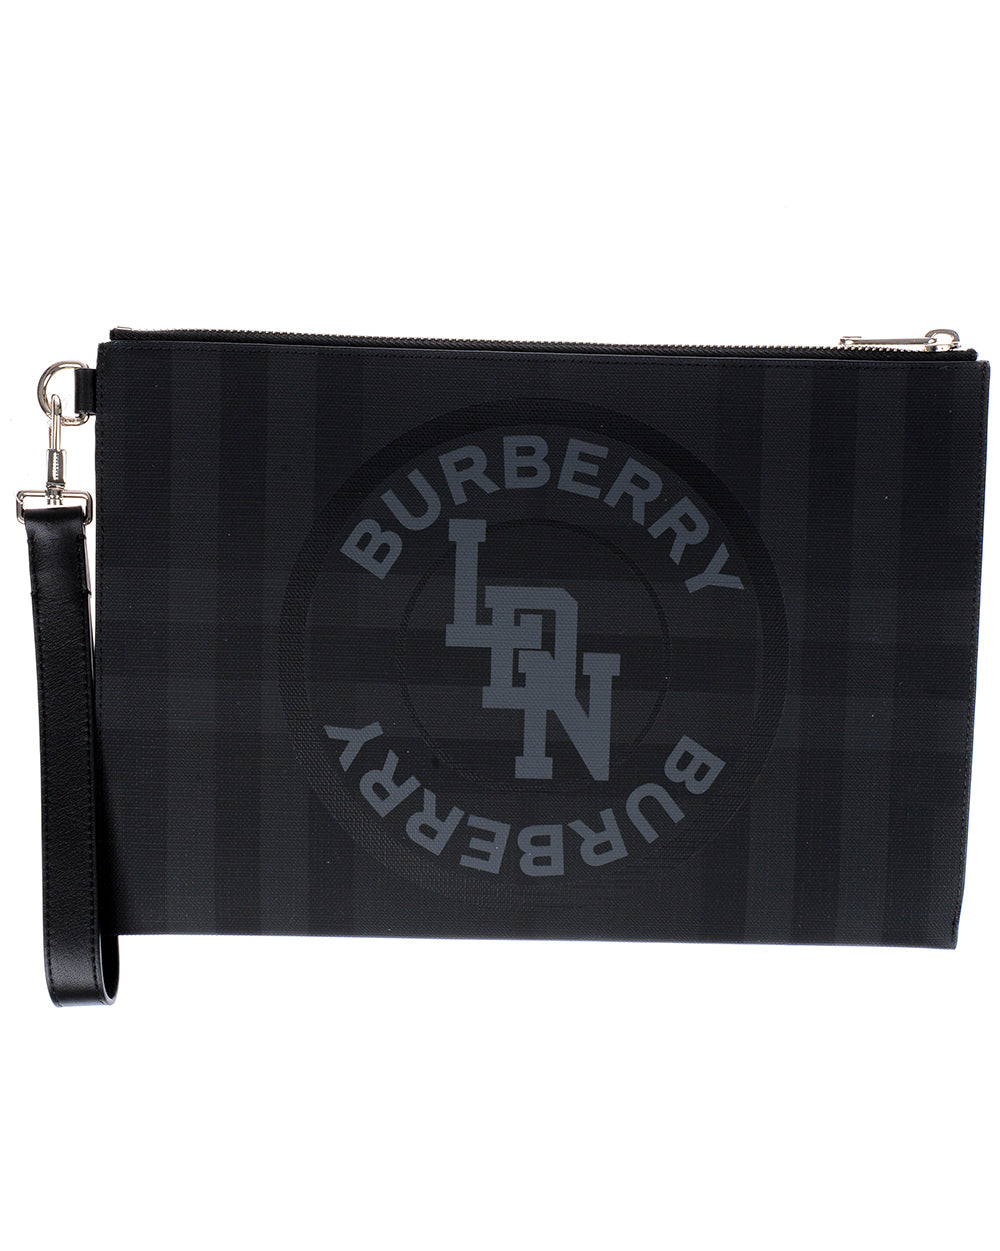 Burberry Camicia XL Beige Essentials